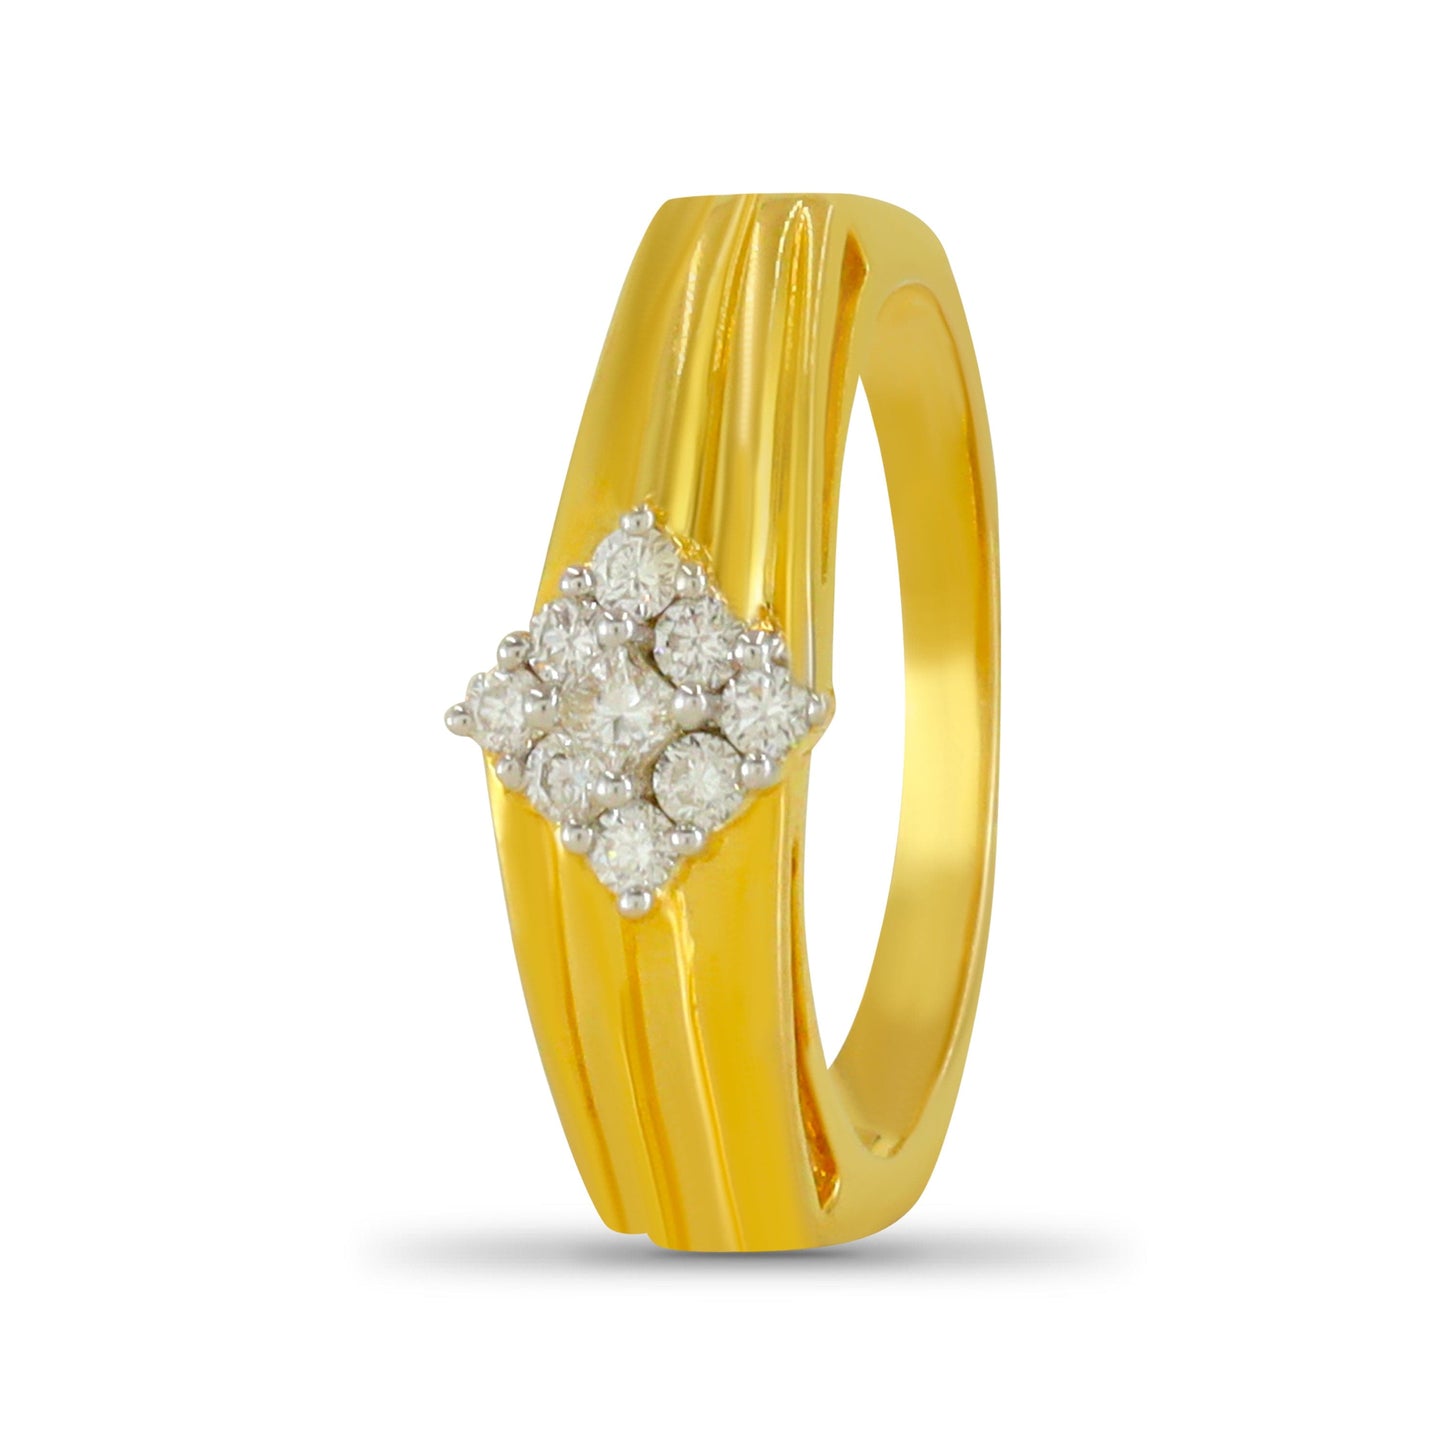 Ari Elegant Diamond Ring For Him